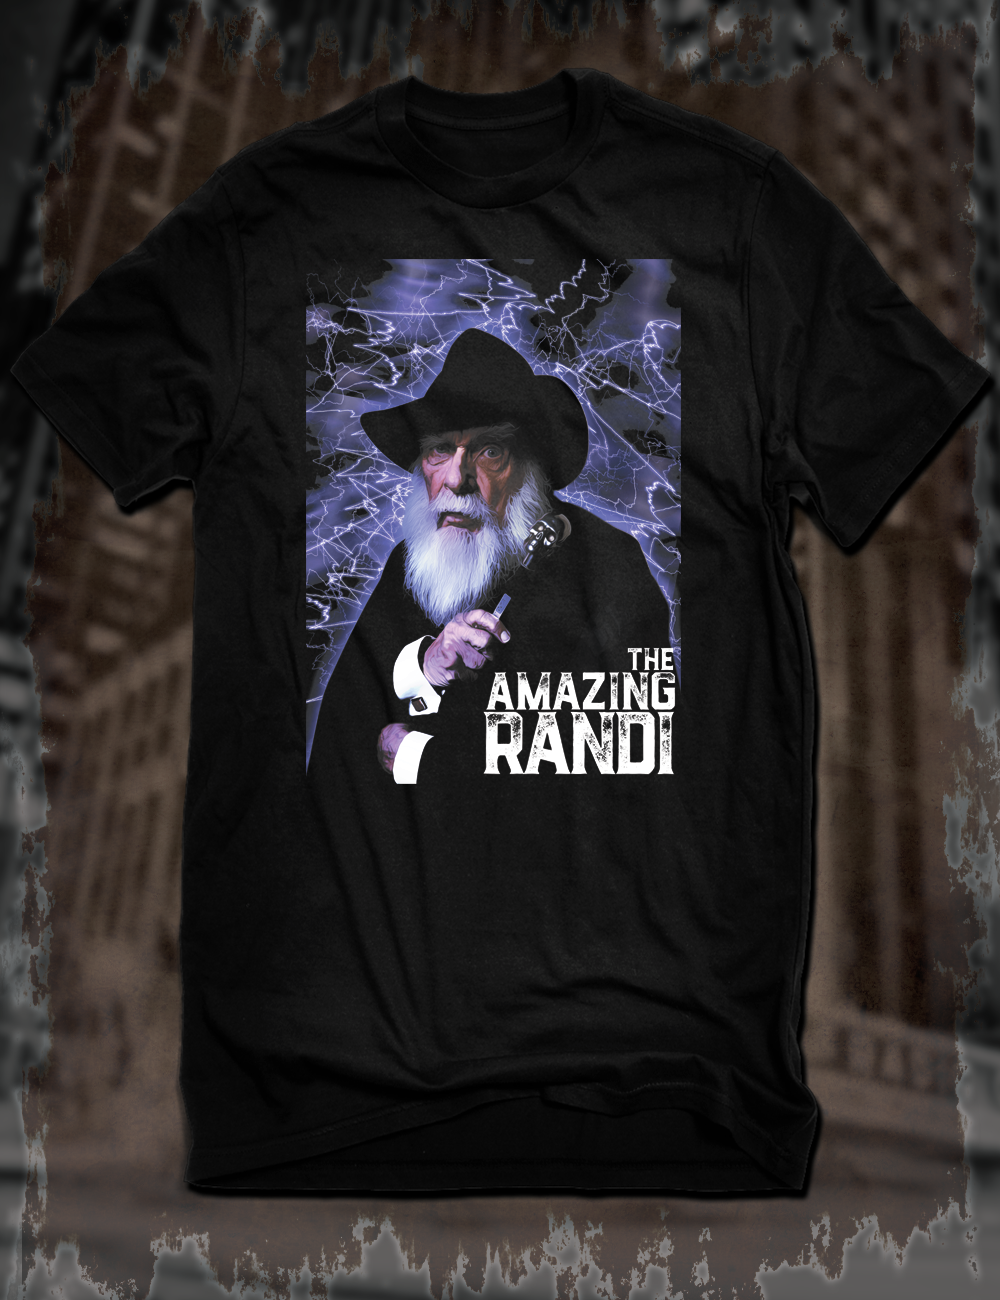 The Amazing Randi T-Shirt